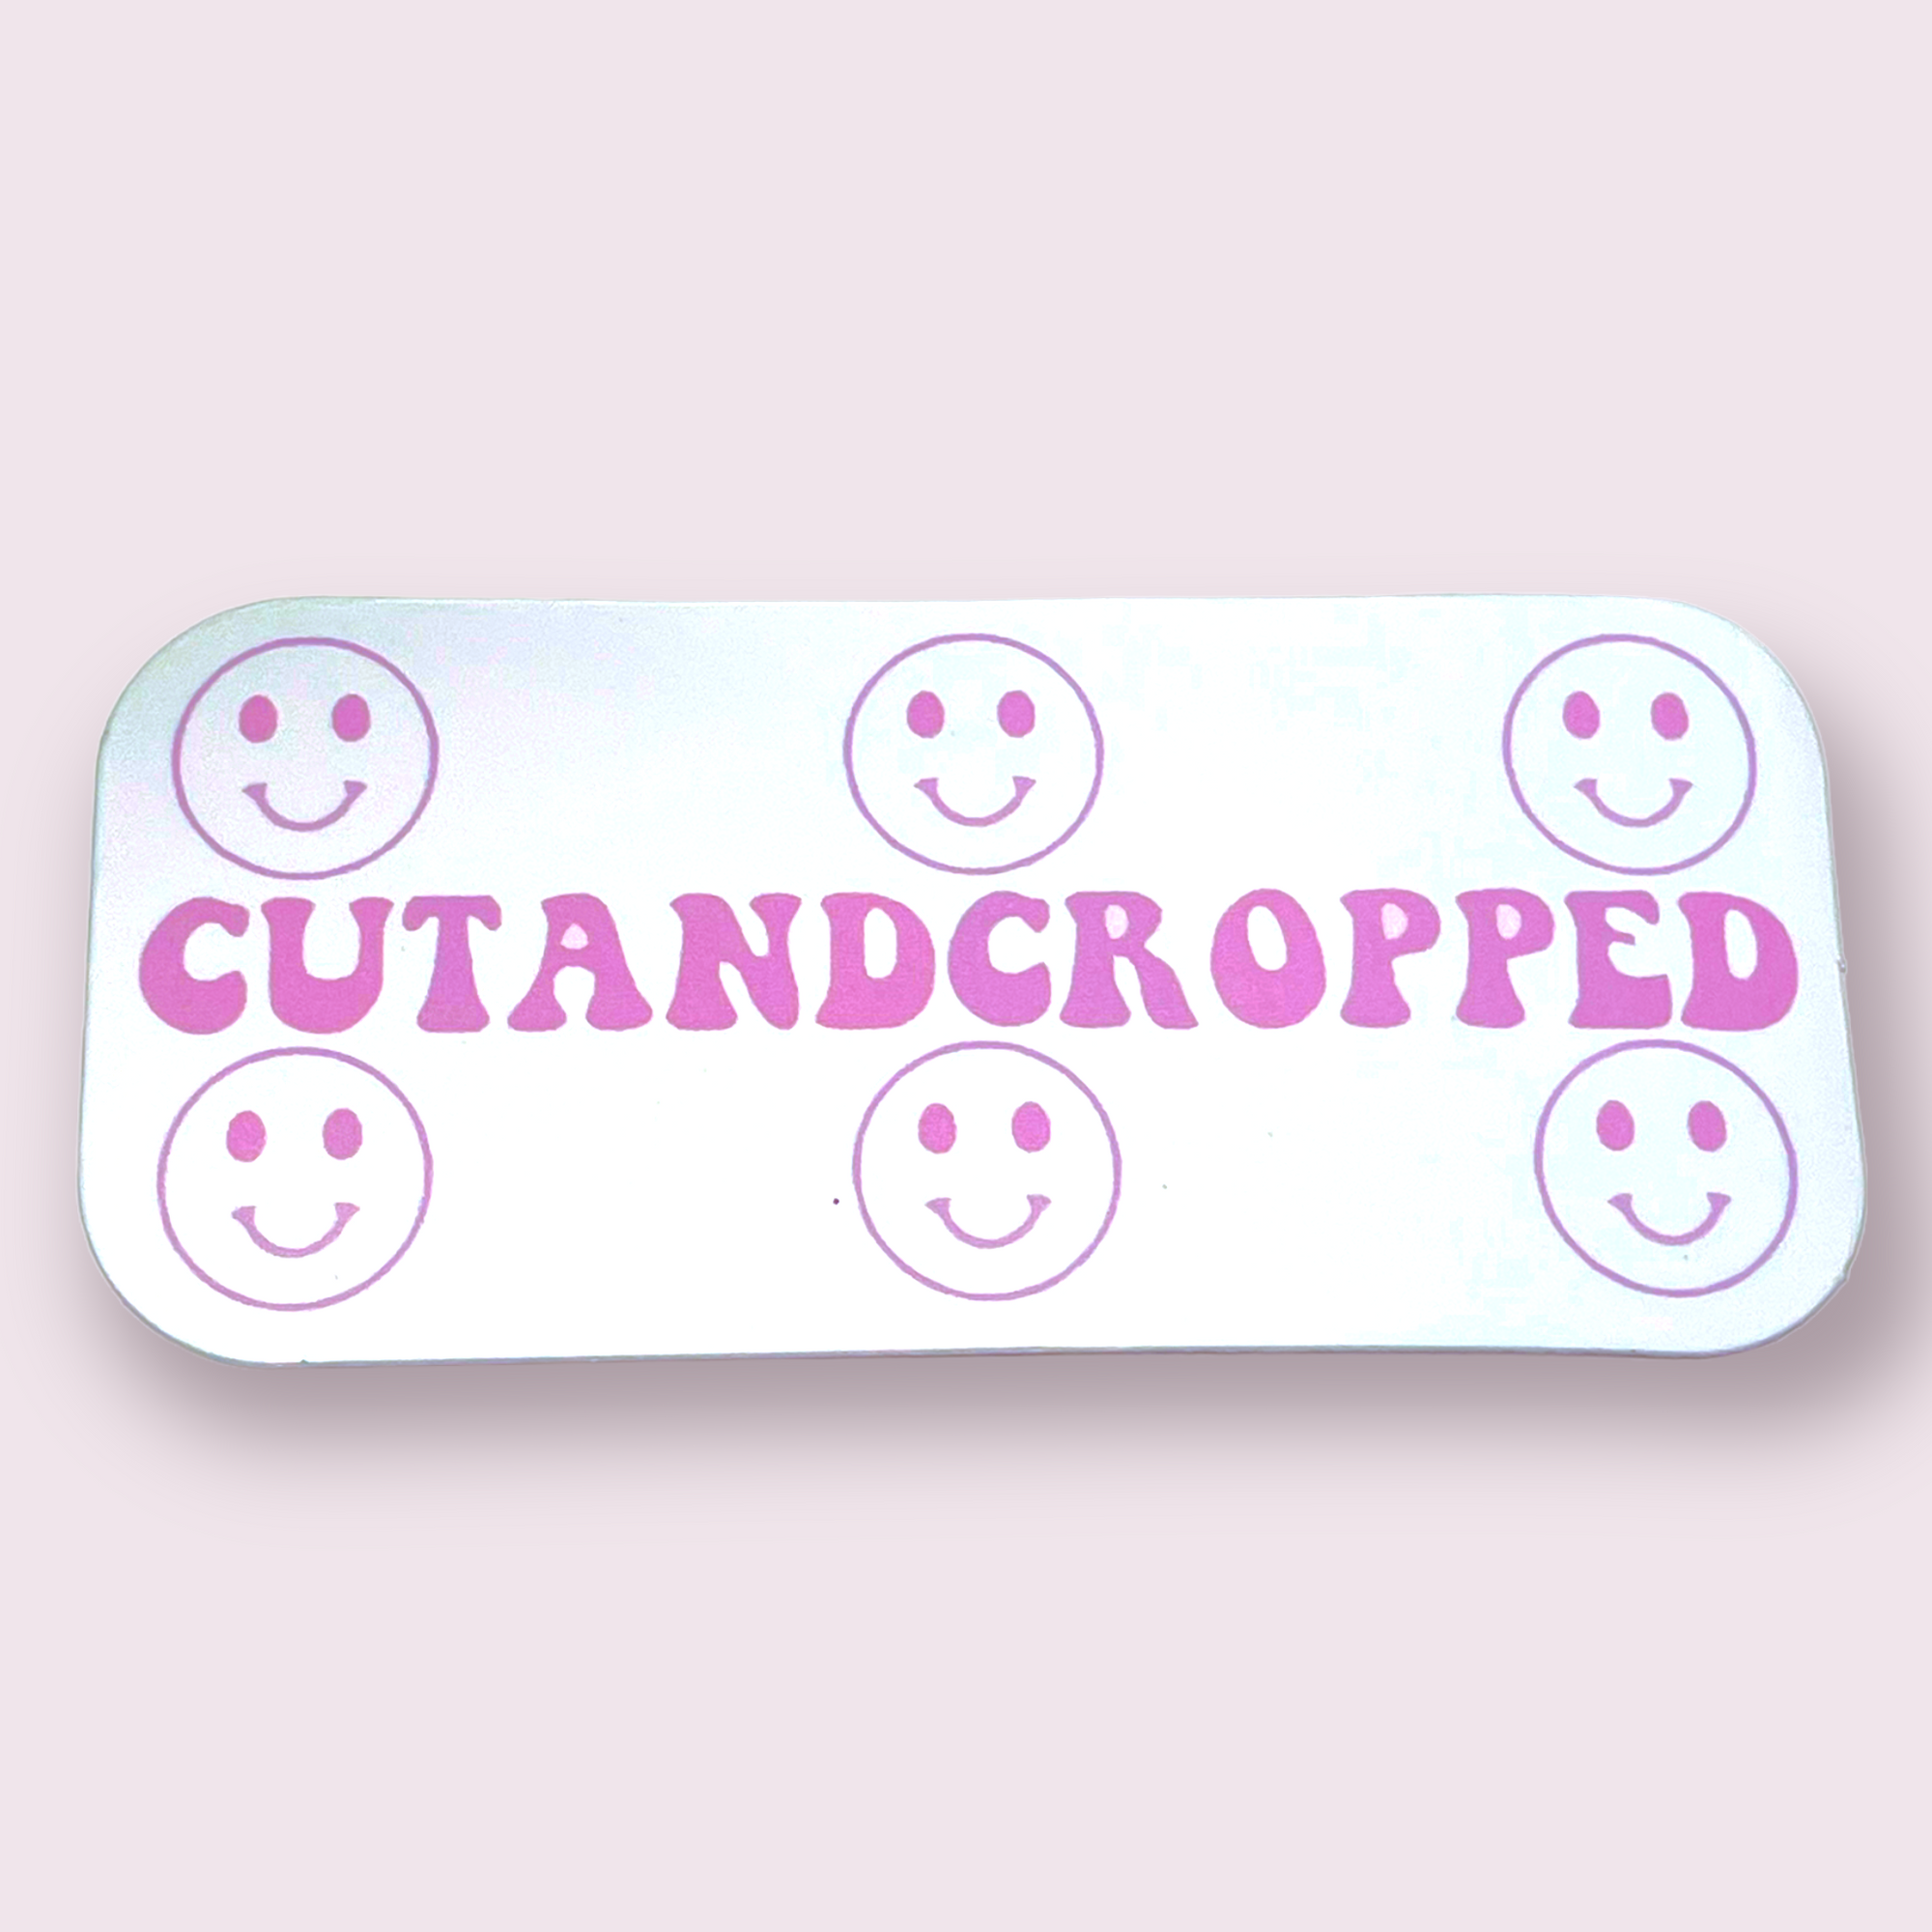 Cutandcropped Sticker